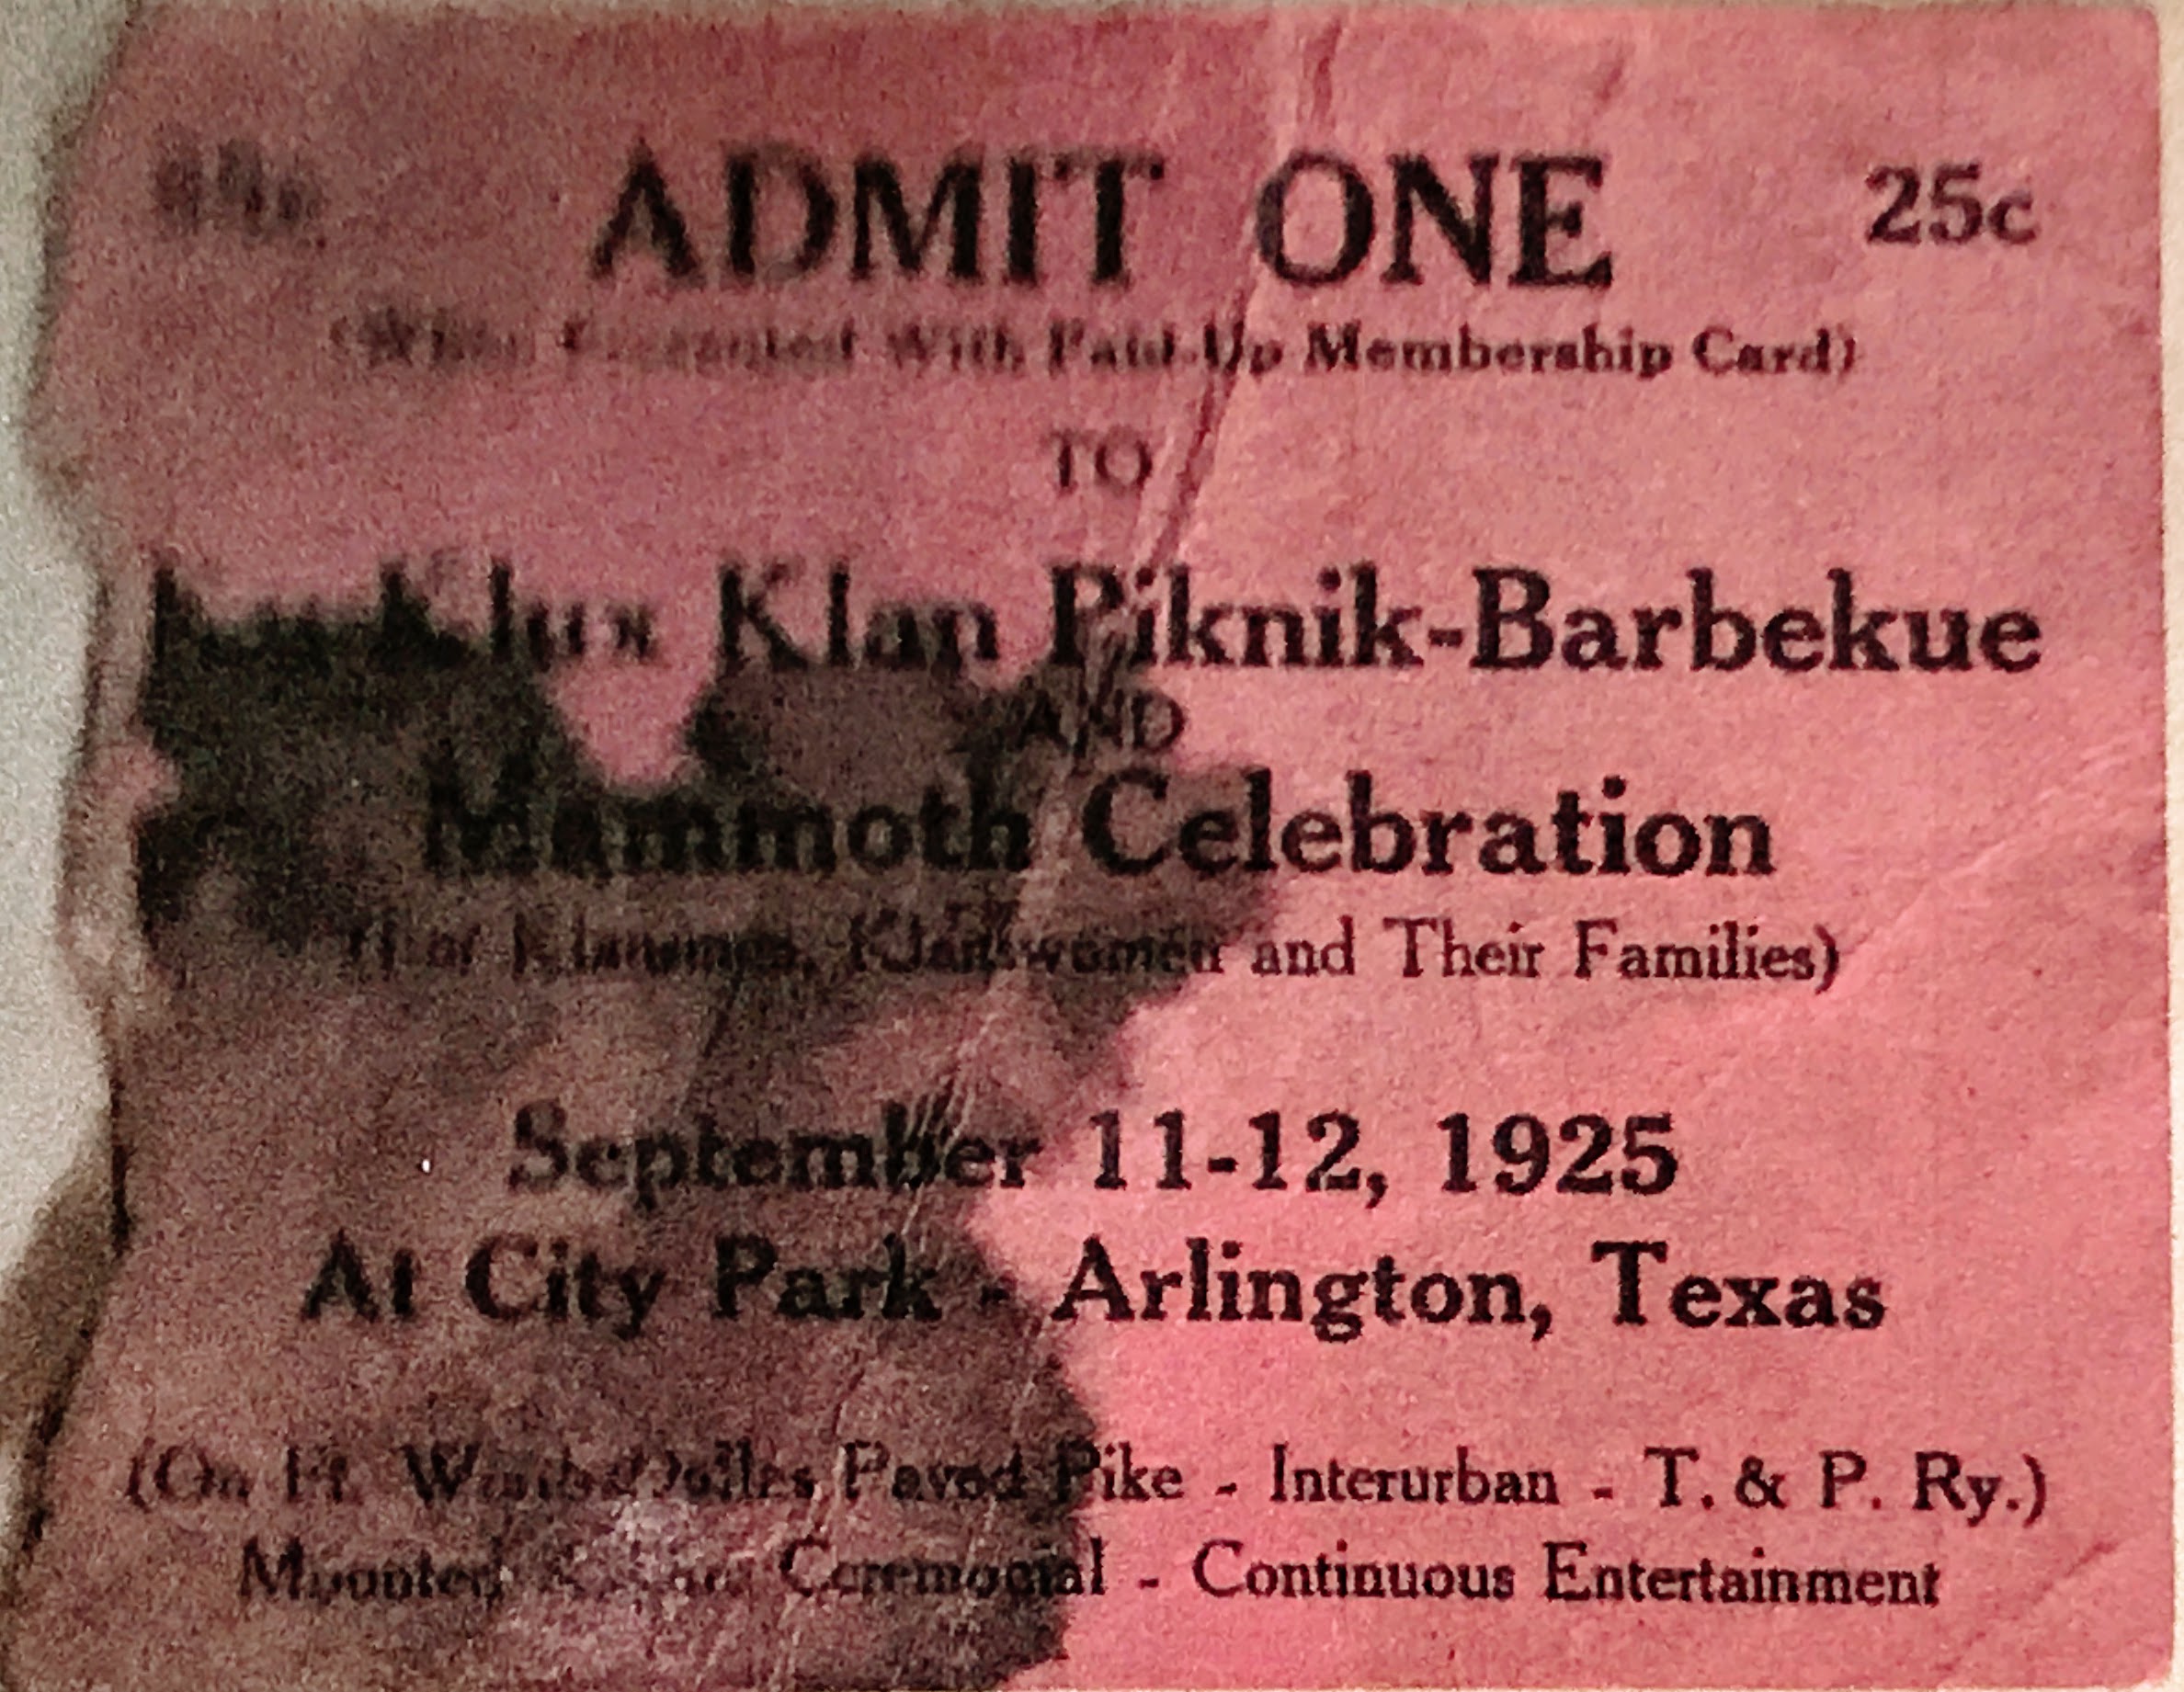 kkk_piknik_barbekue_-_city_park_arlington_september_1925